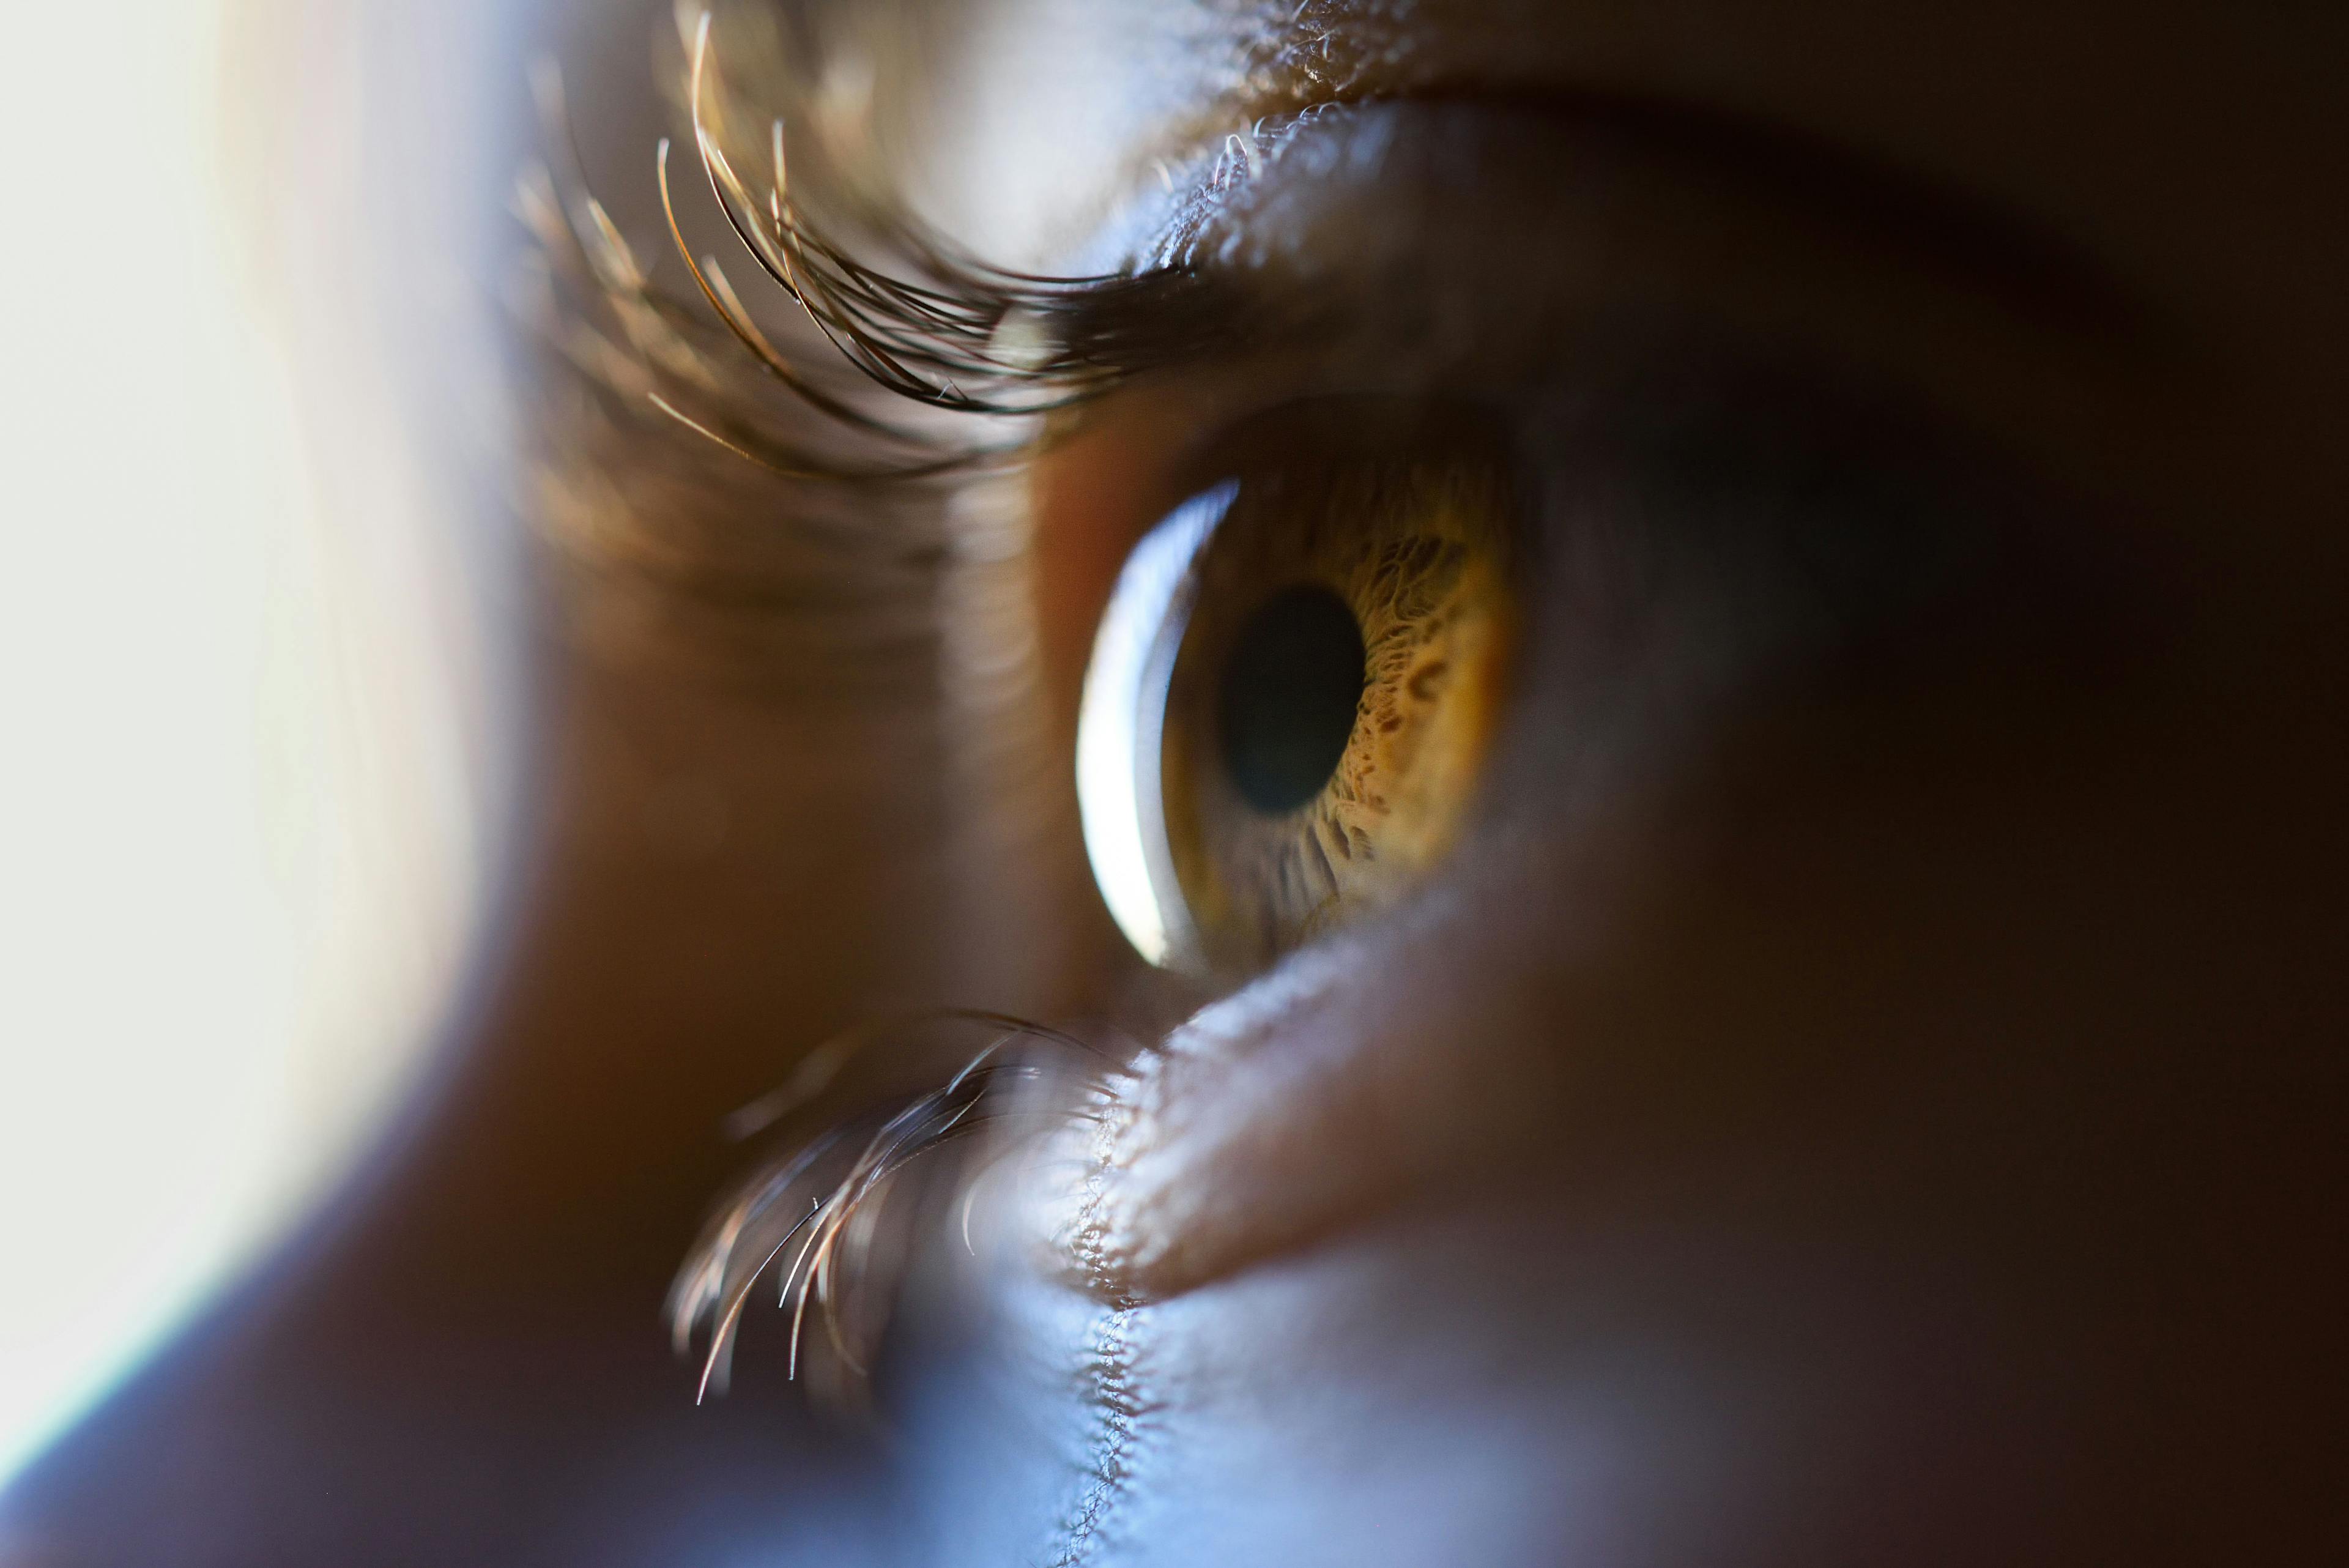 New genetic mutation behind childhood glaucoma identified